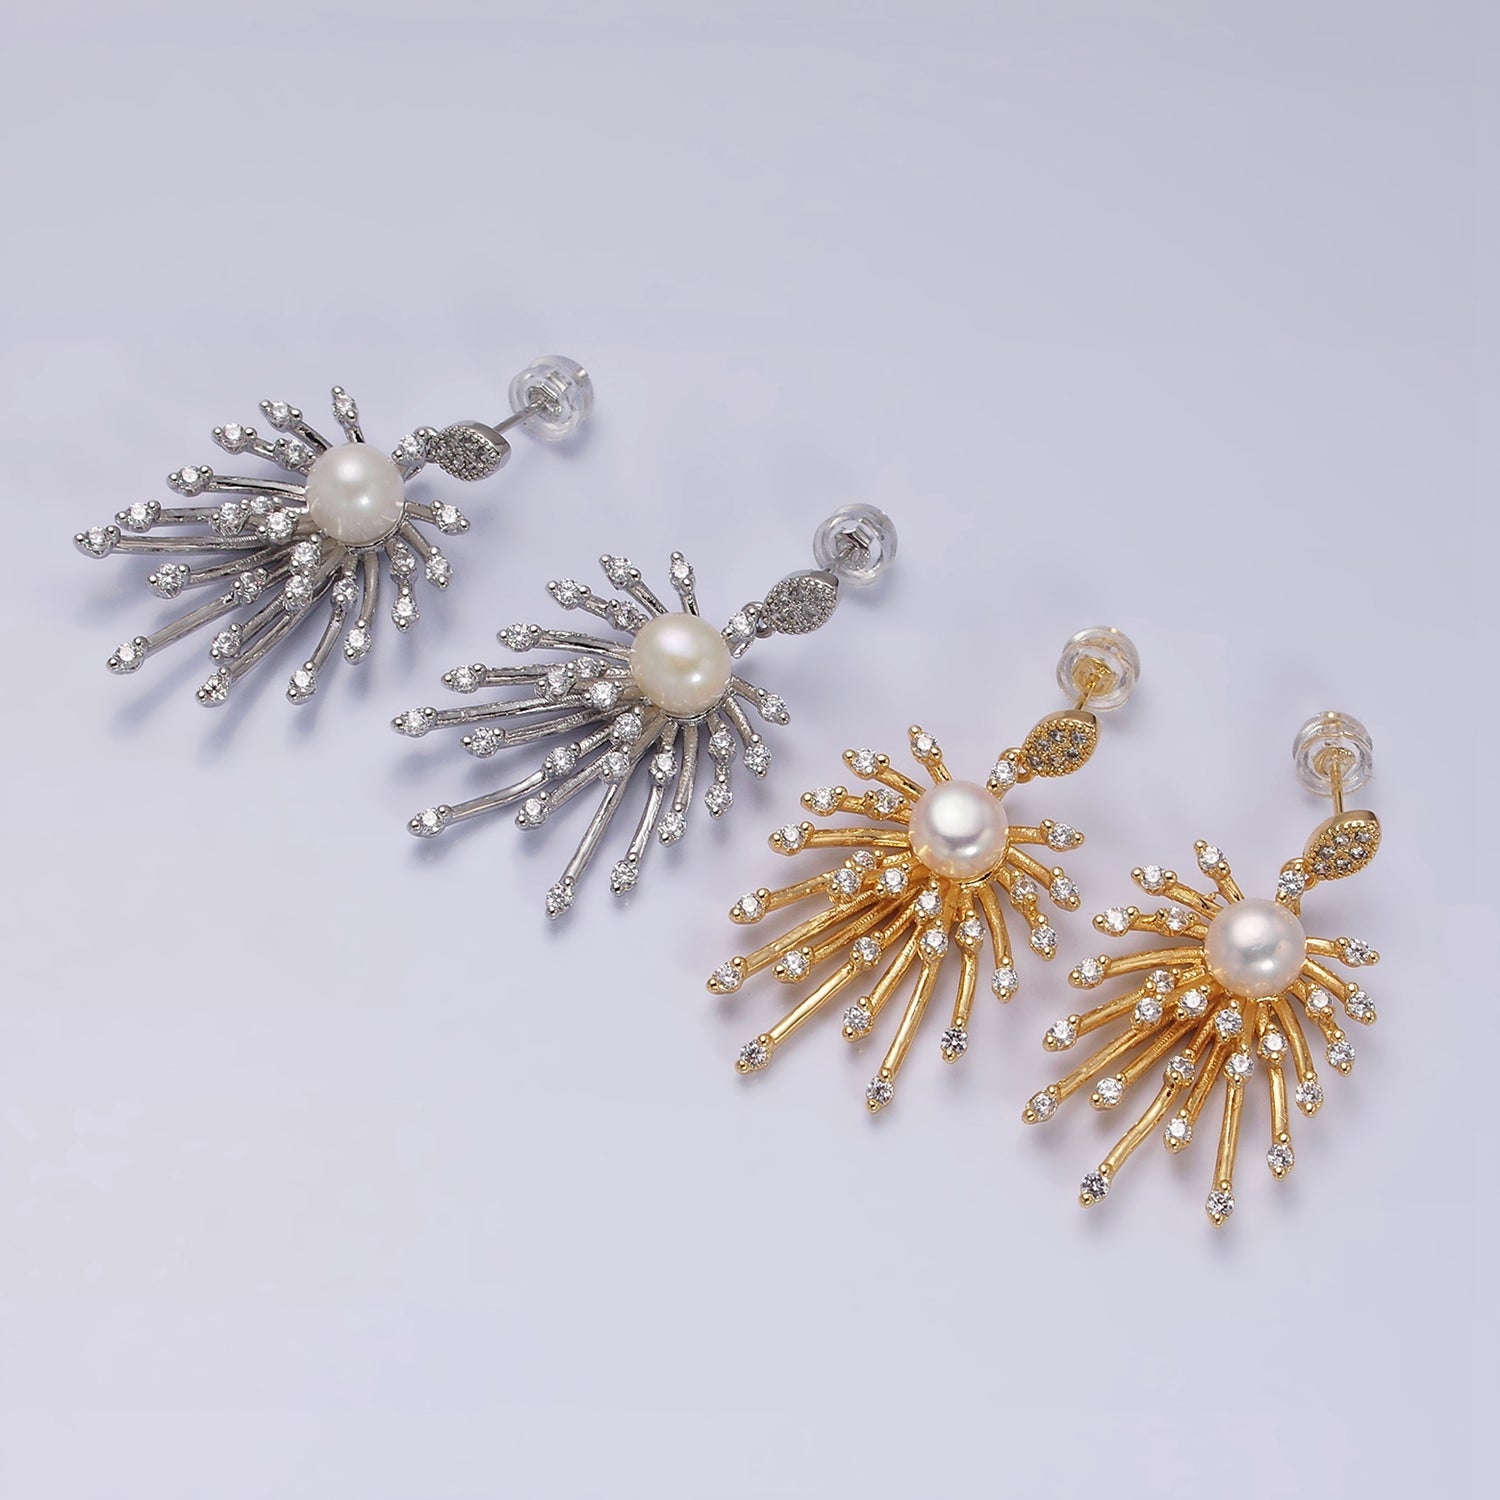 16K Gold Filled Celestial Fireworks Sunburst Pearl CZ Stud Earrings in Gold & Silver | AD1273 AD1274 - DLUXCA